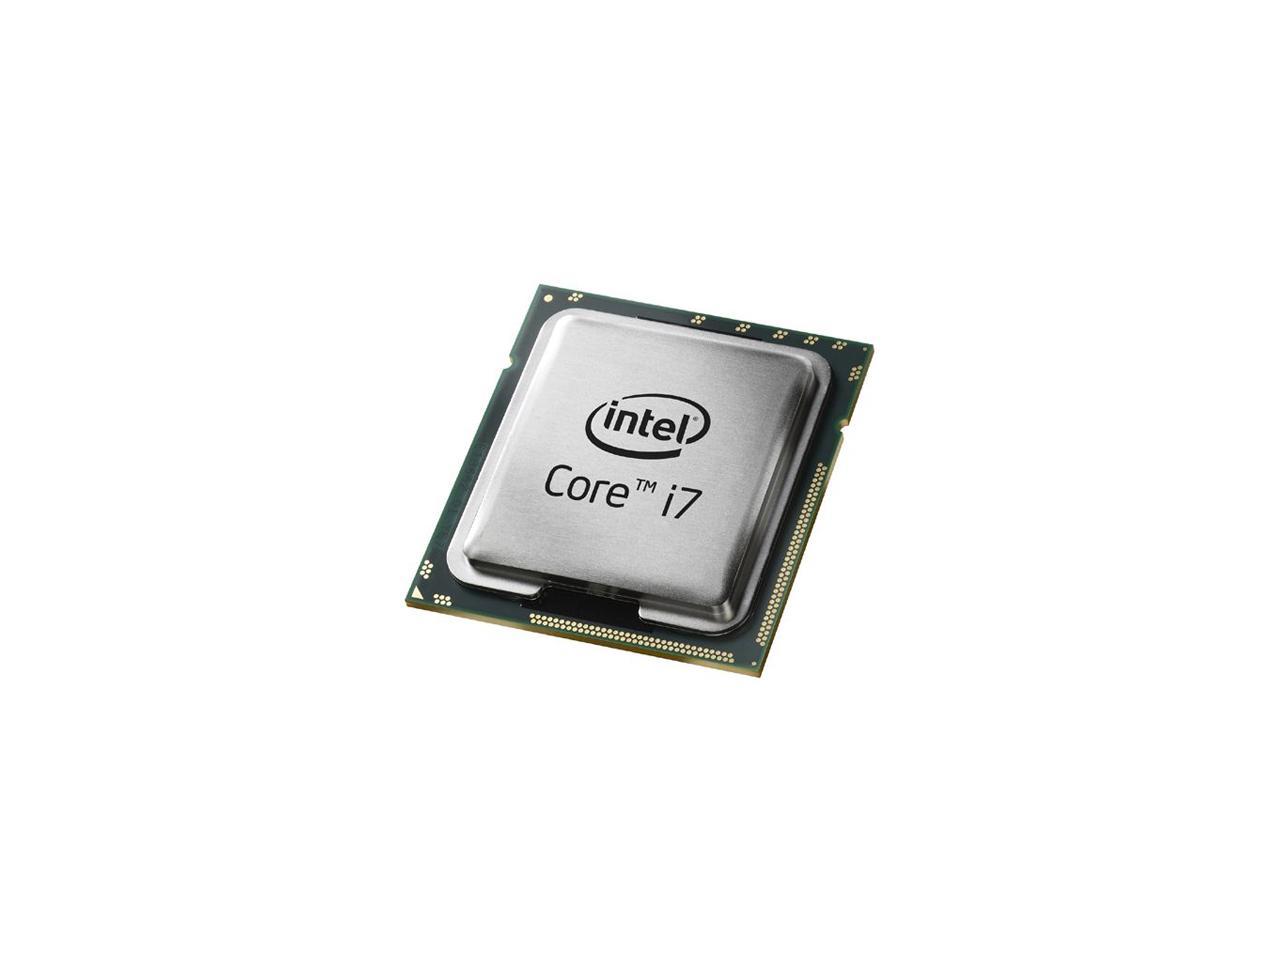 Intel Core I7 940xm Extreme Edition 2 13 Ghz Socket G1 55w Byae Mobile Processor Newegg Com